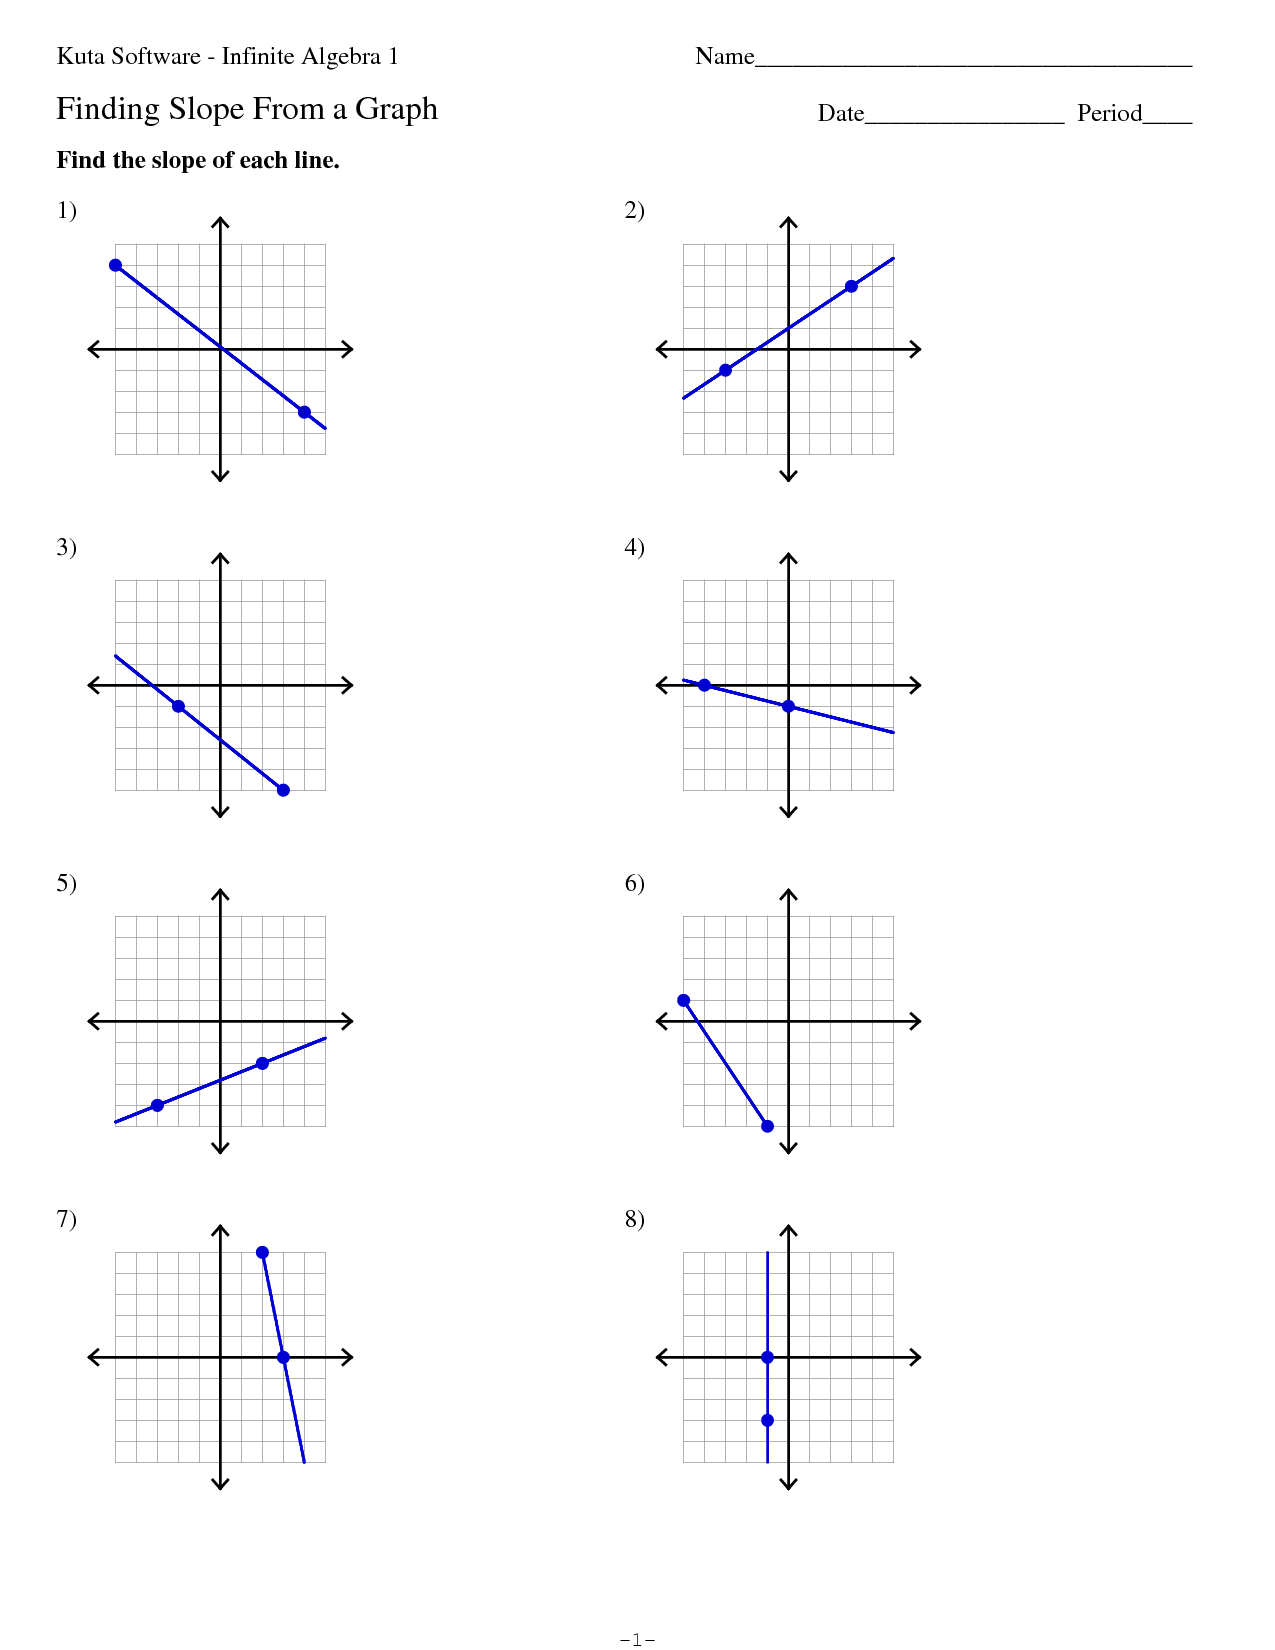 16-best-images-of-infinite-algebra-1-worksheets-kuta-software